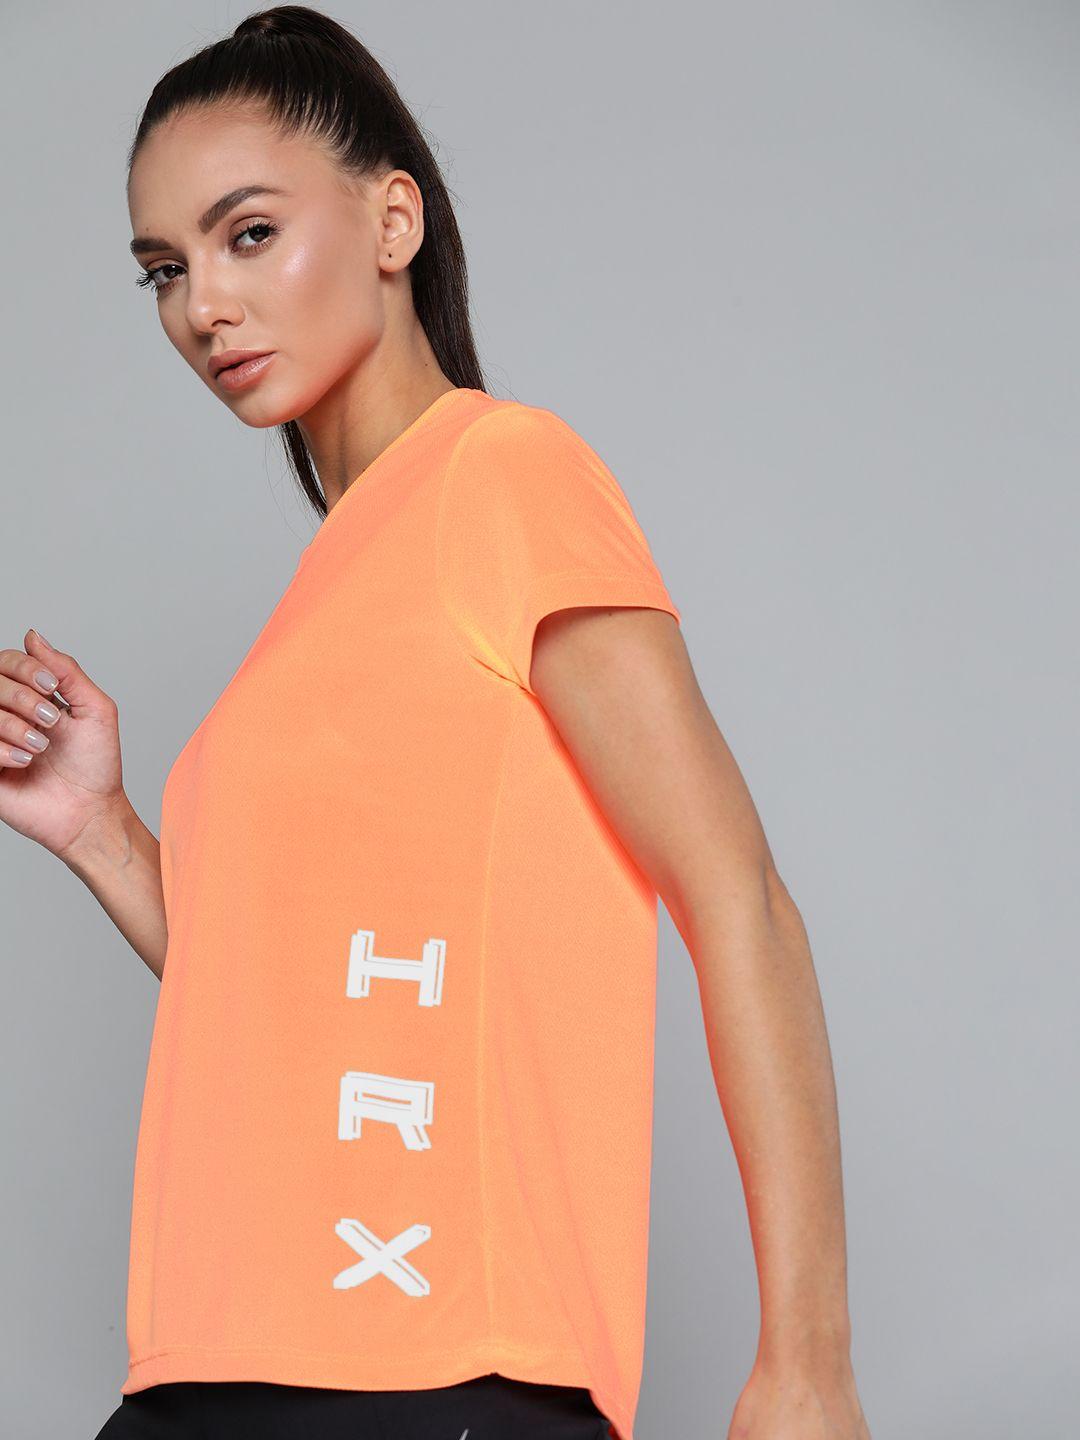 hrx by hrithik roshan running women neon orange rapid-dry brand carrier tshirts